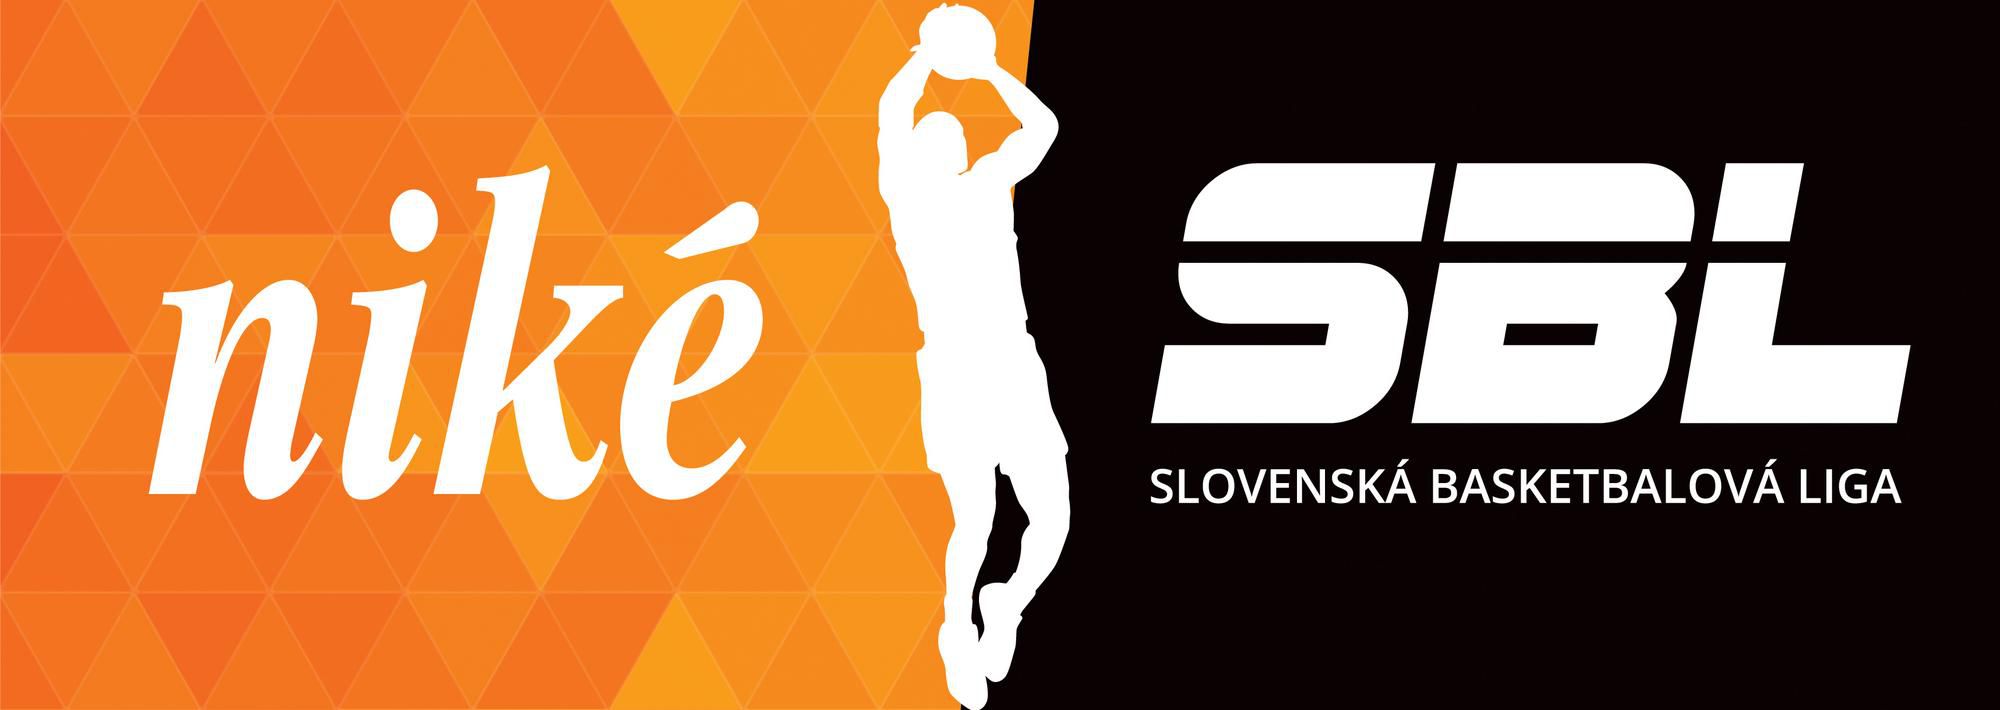 Nové logo SBL.